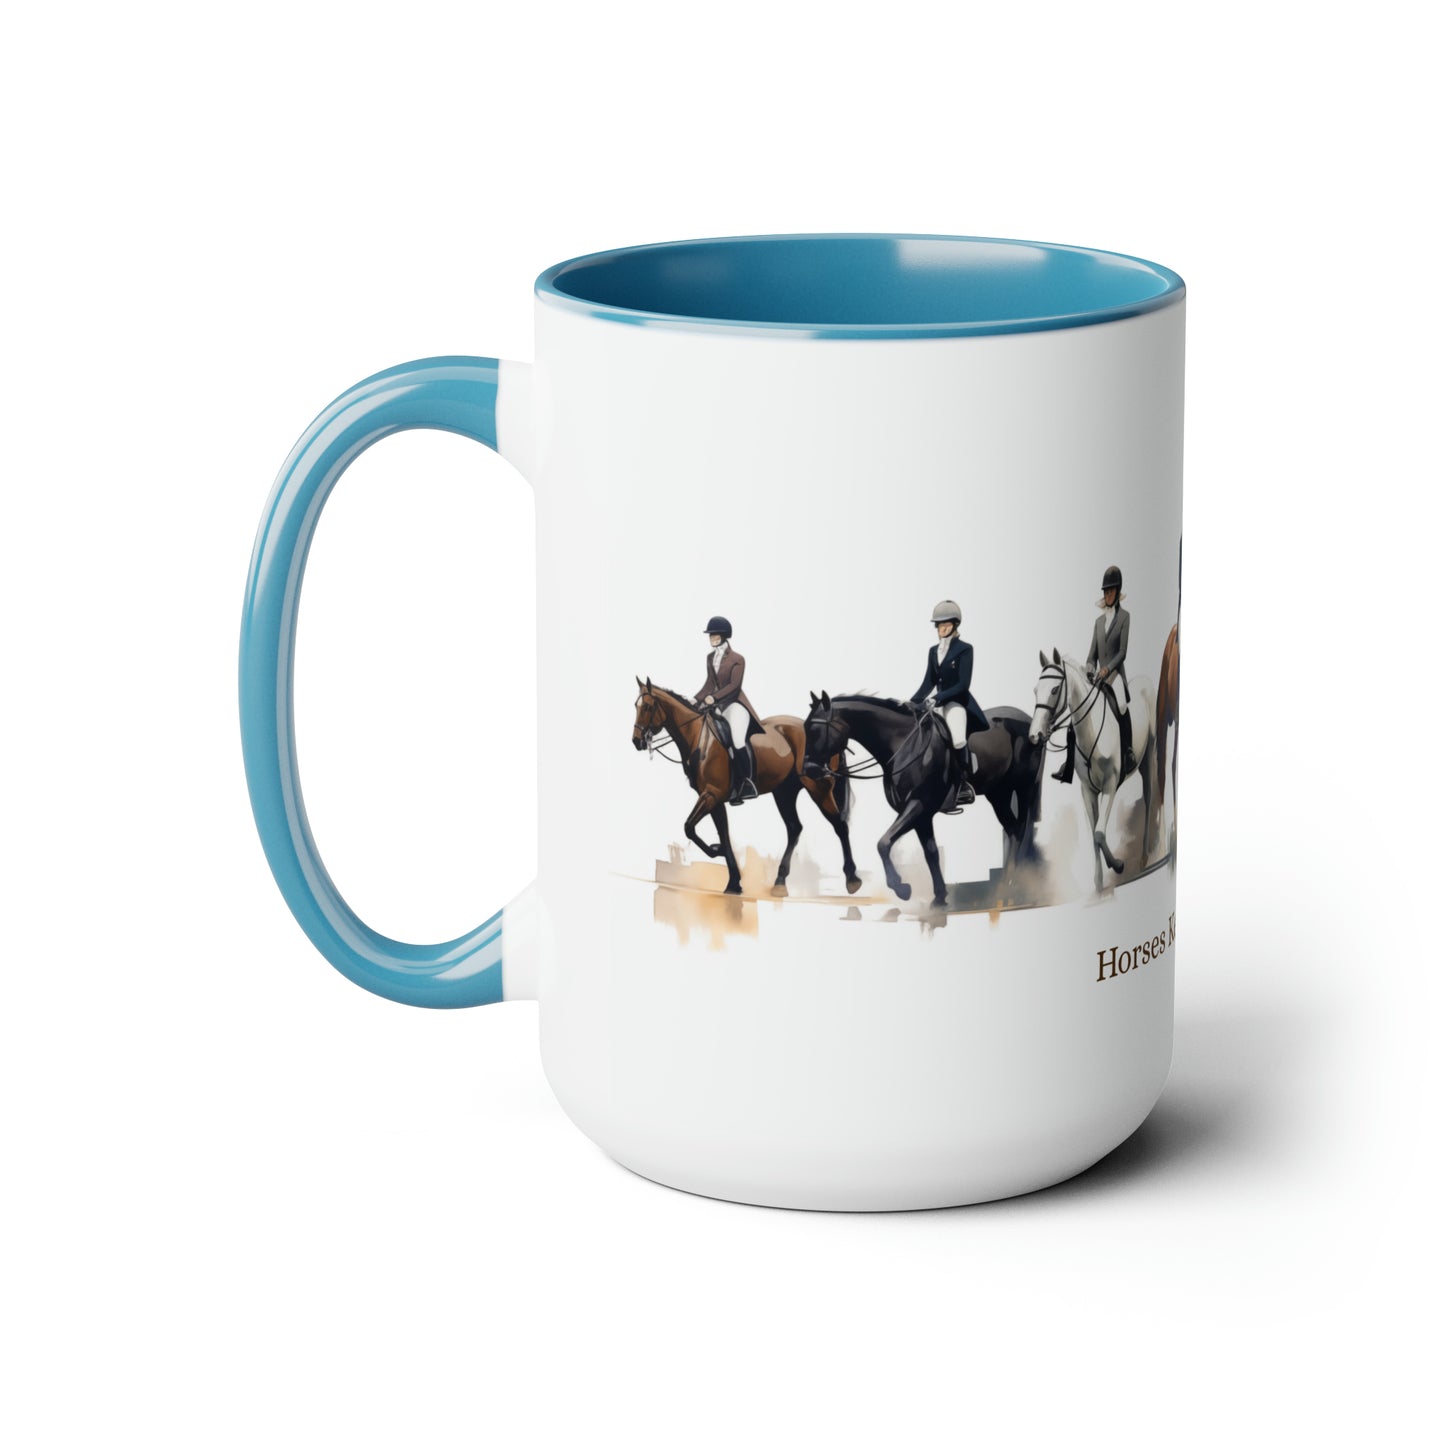 Horses Keep Me Stable Coffee Mugs, 15oz